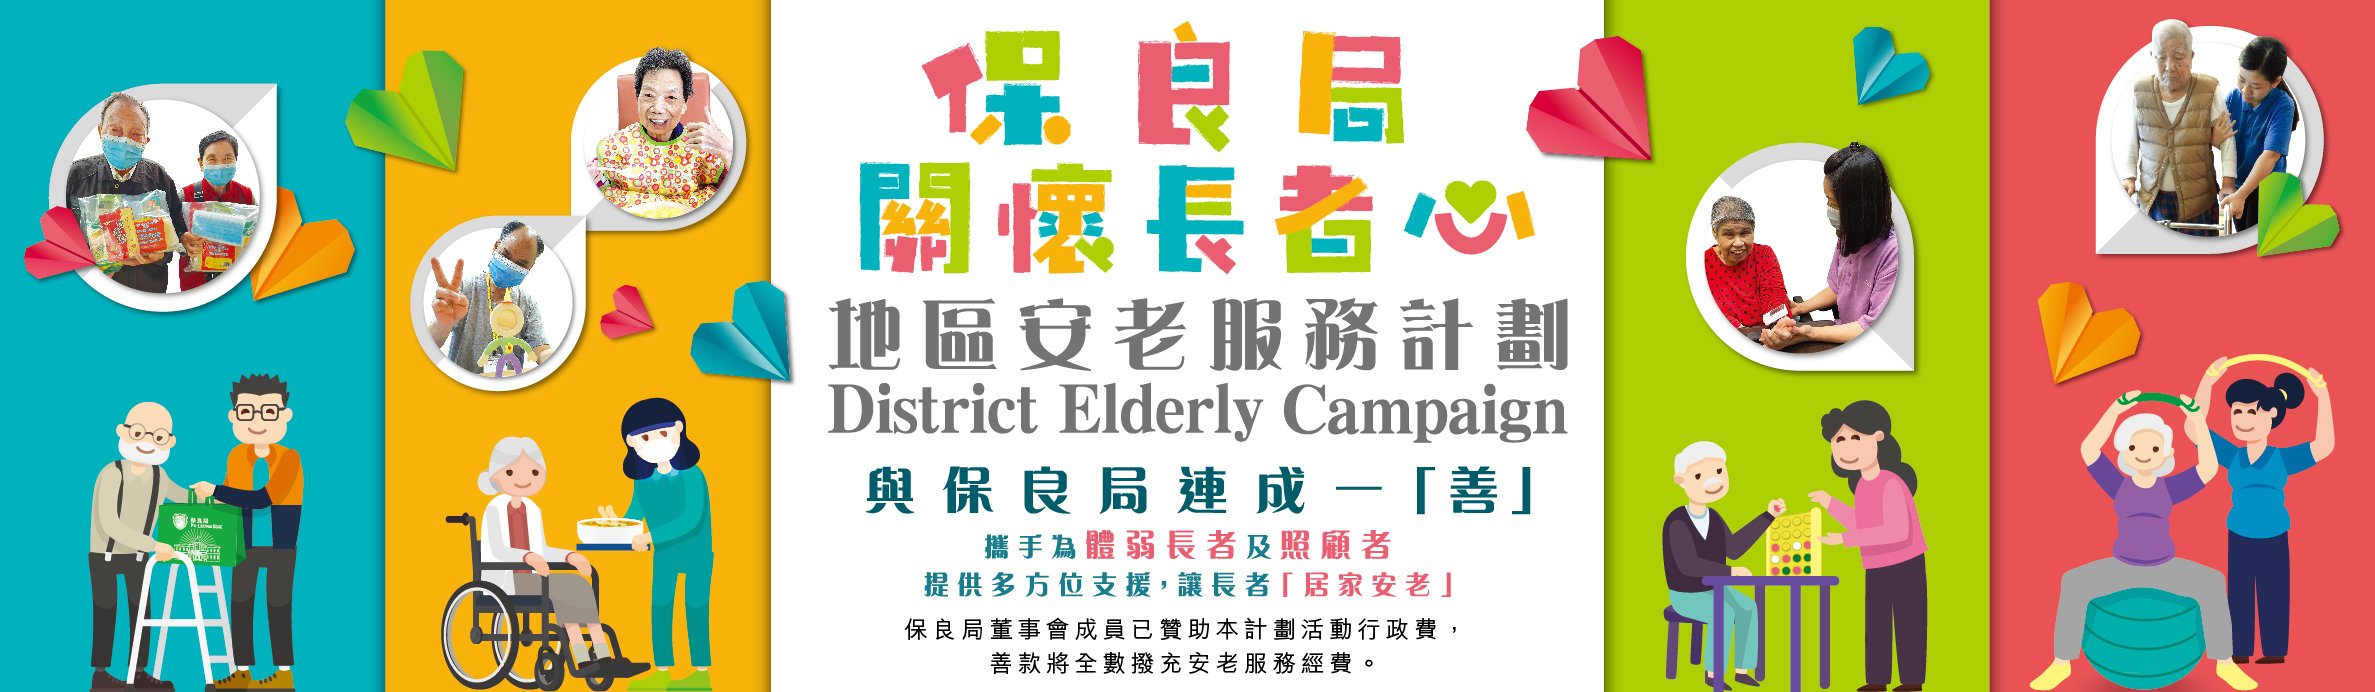 District Elderly Campaign Banner